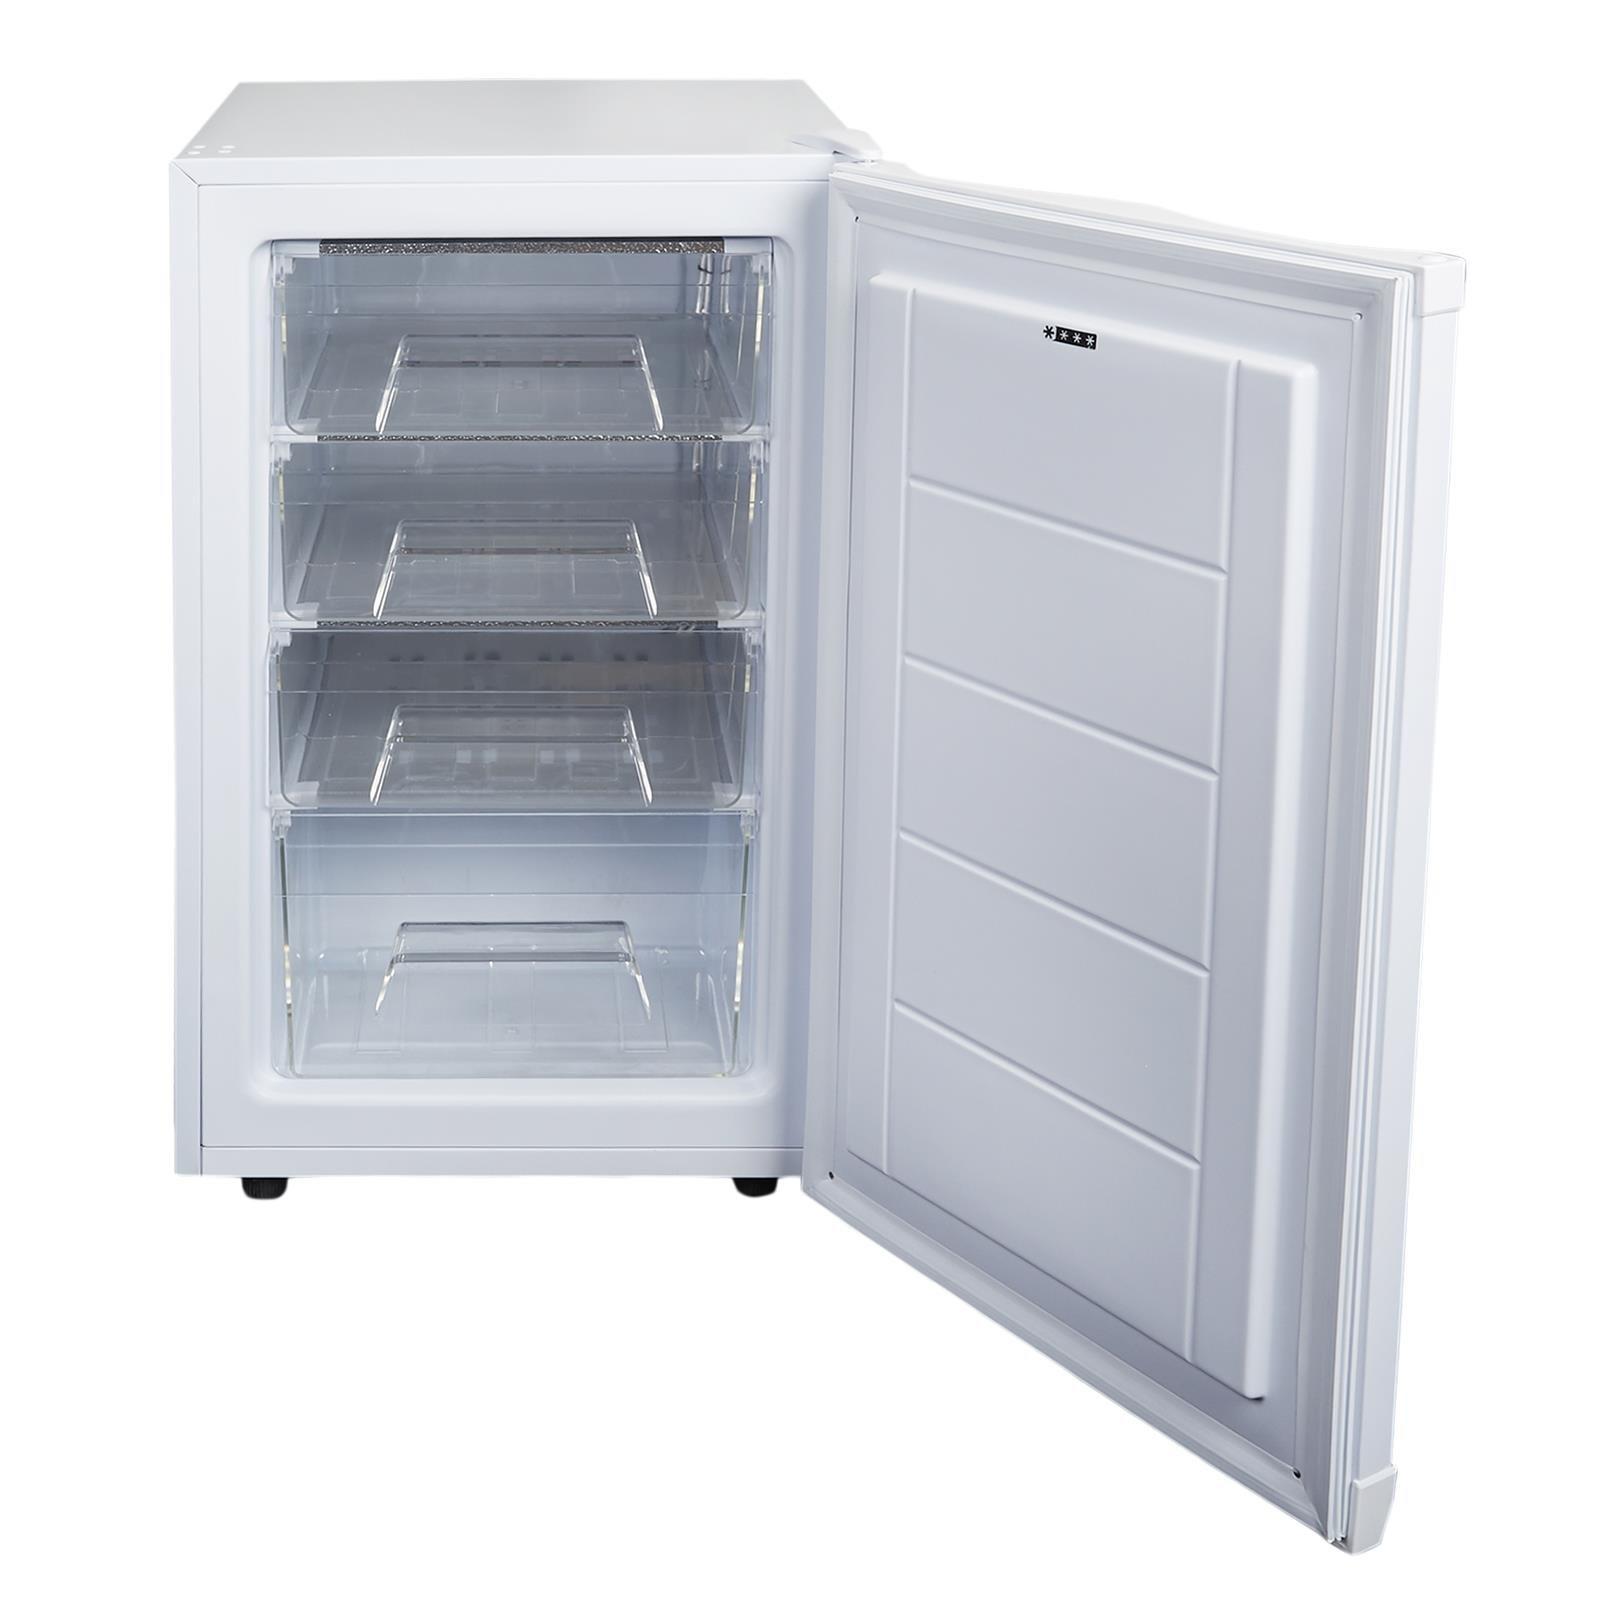 UCF50WH 50cm White Freestanding Under Counter Freezer 80L